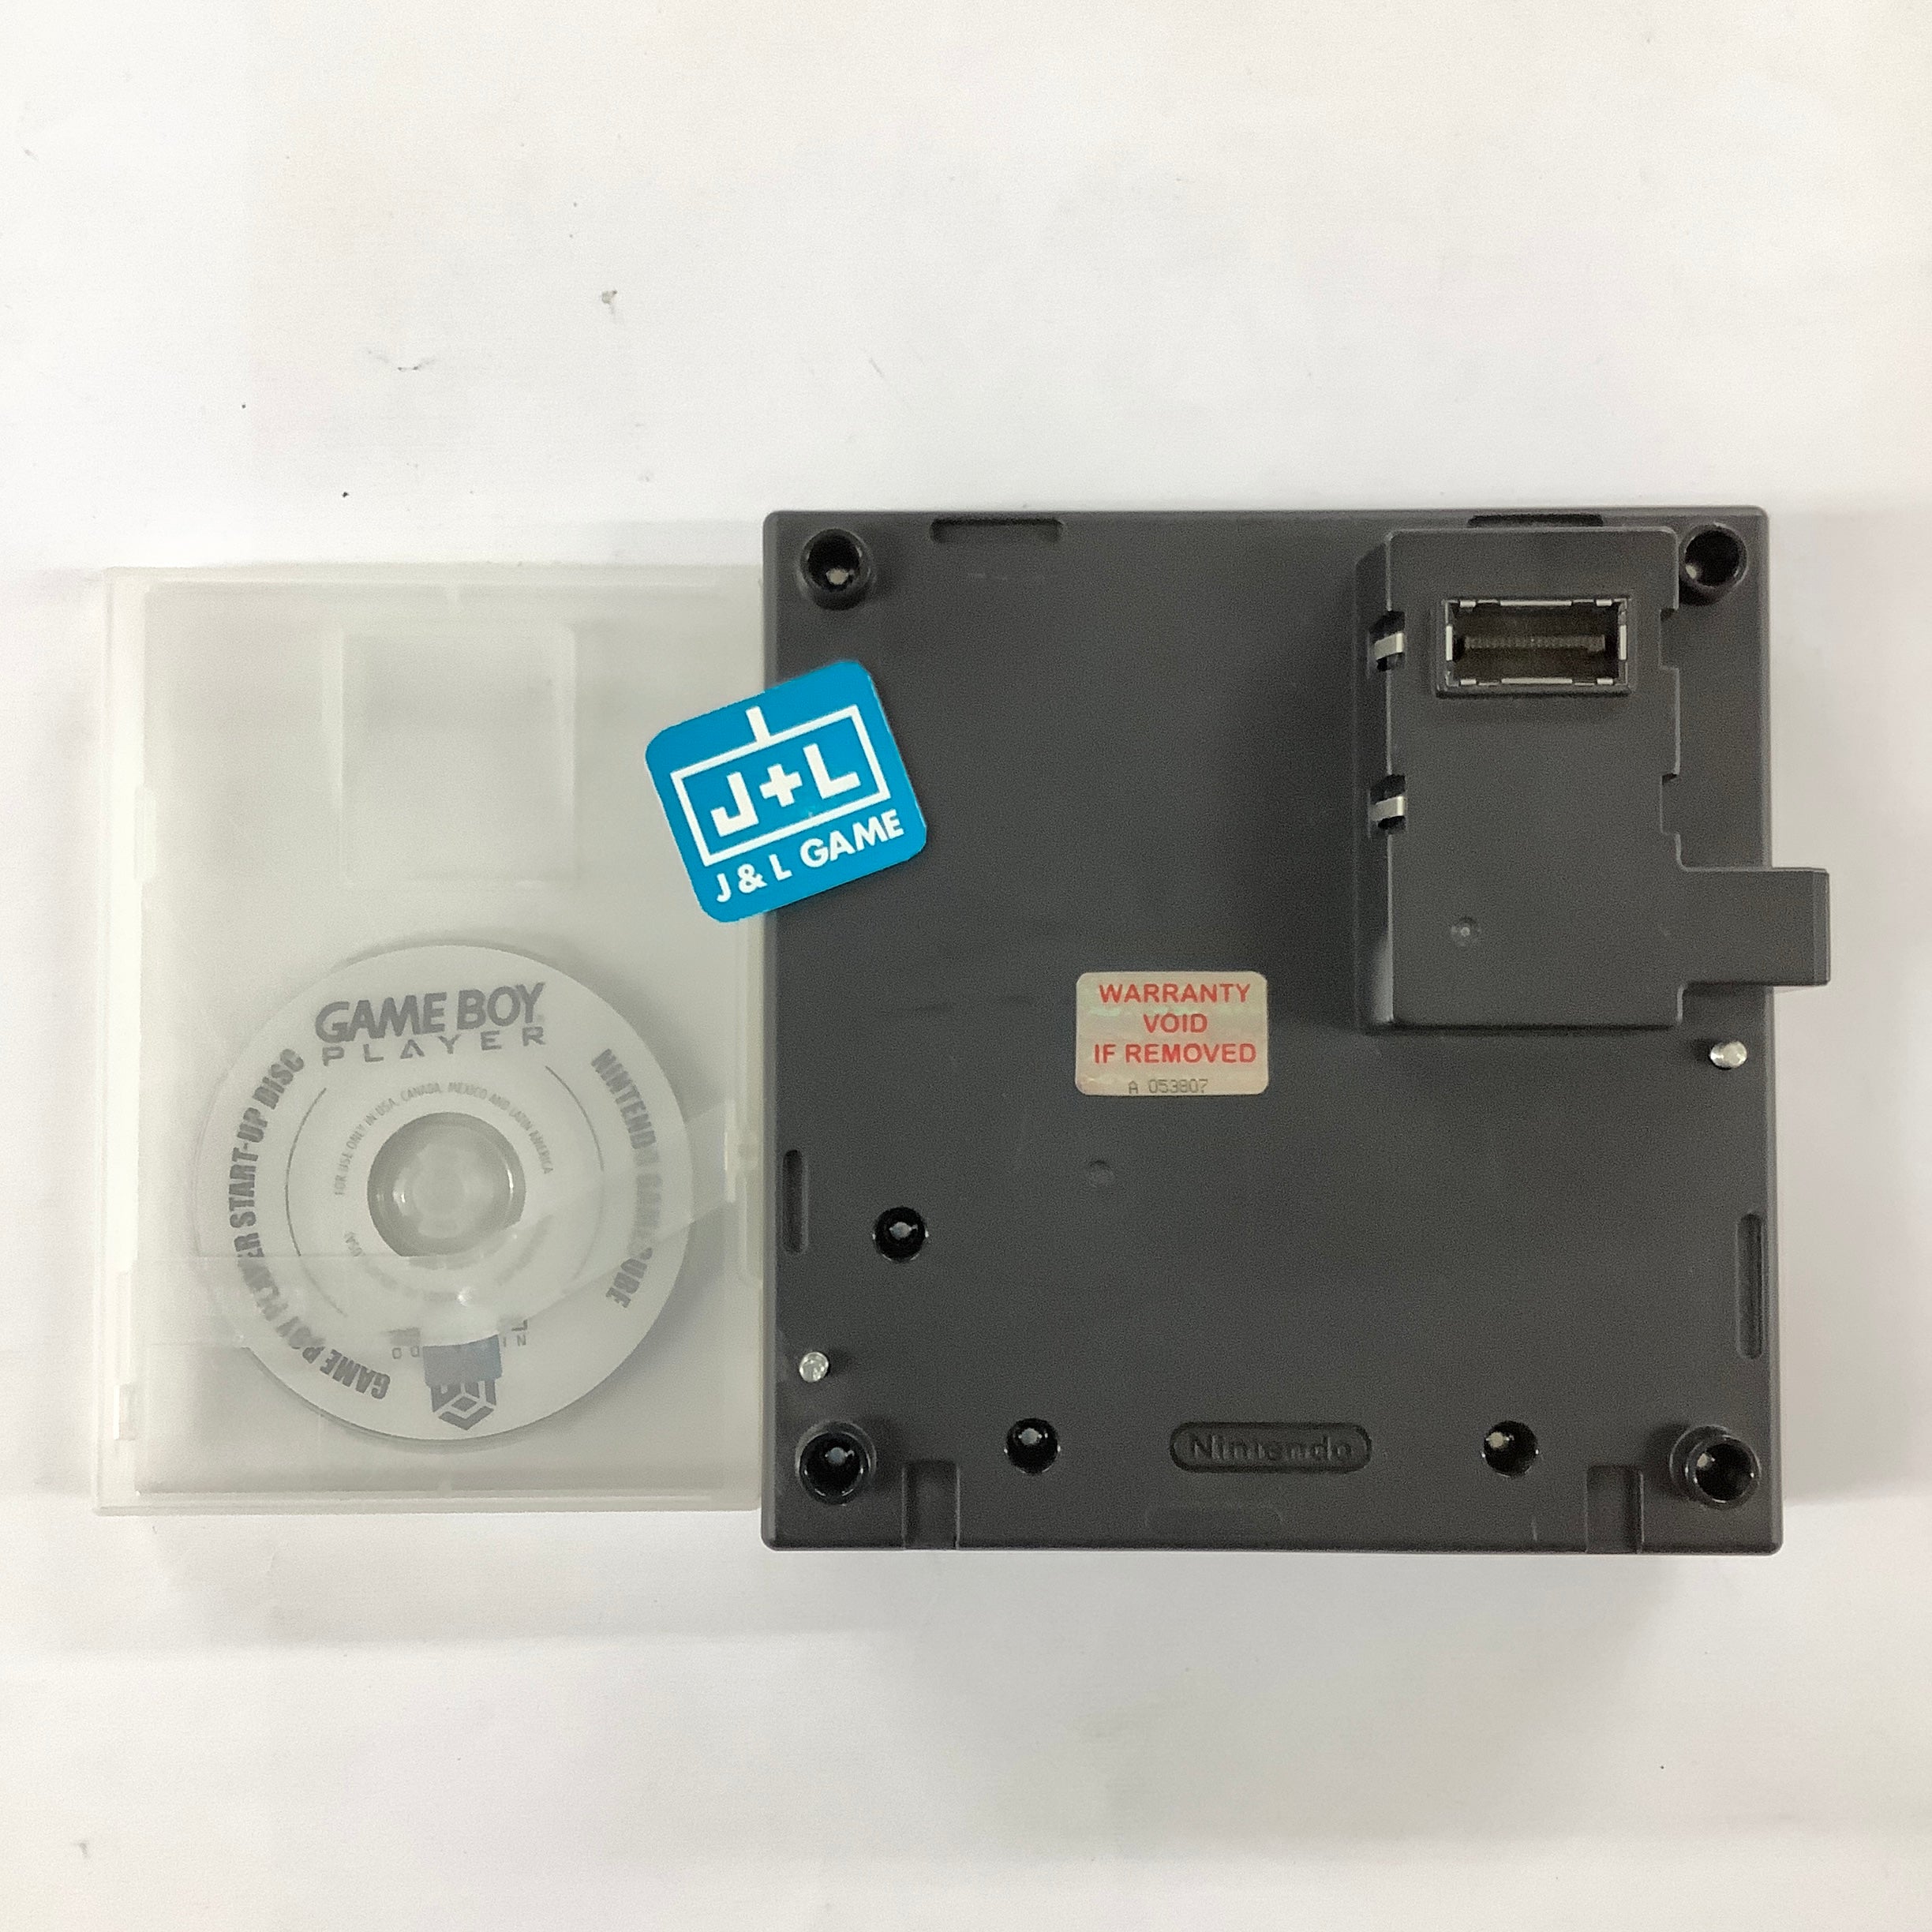 Nintendo Game Boy Player (Black) - (GC) GameCube [Pre-Owned] Video Games Nintendo   